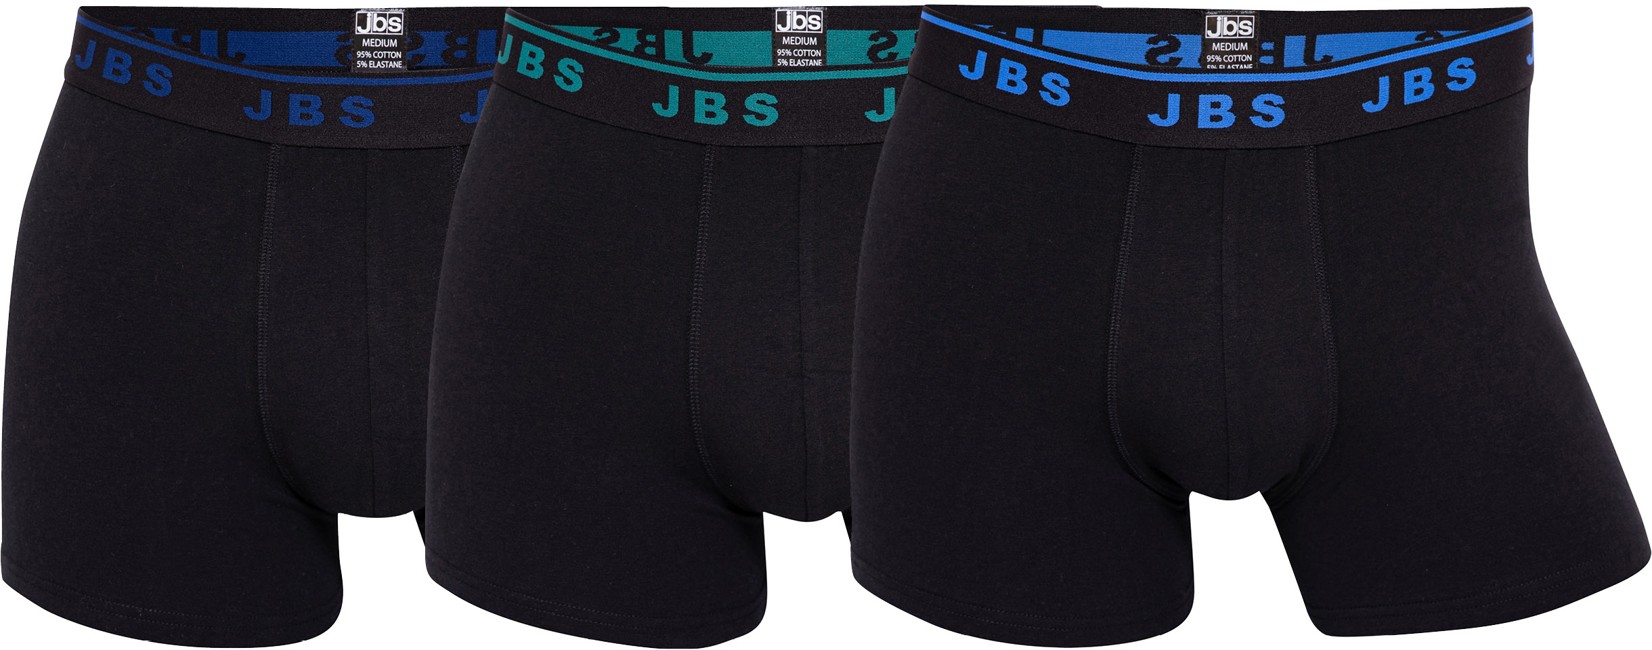 JBS - Tights 3-Pack - Black,Blue, Grey